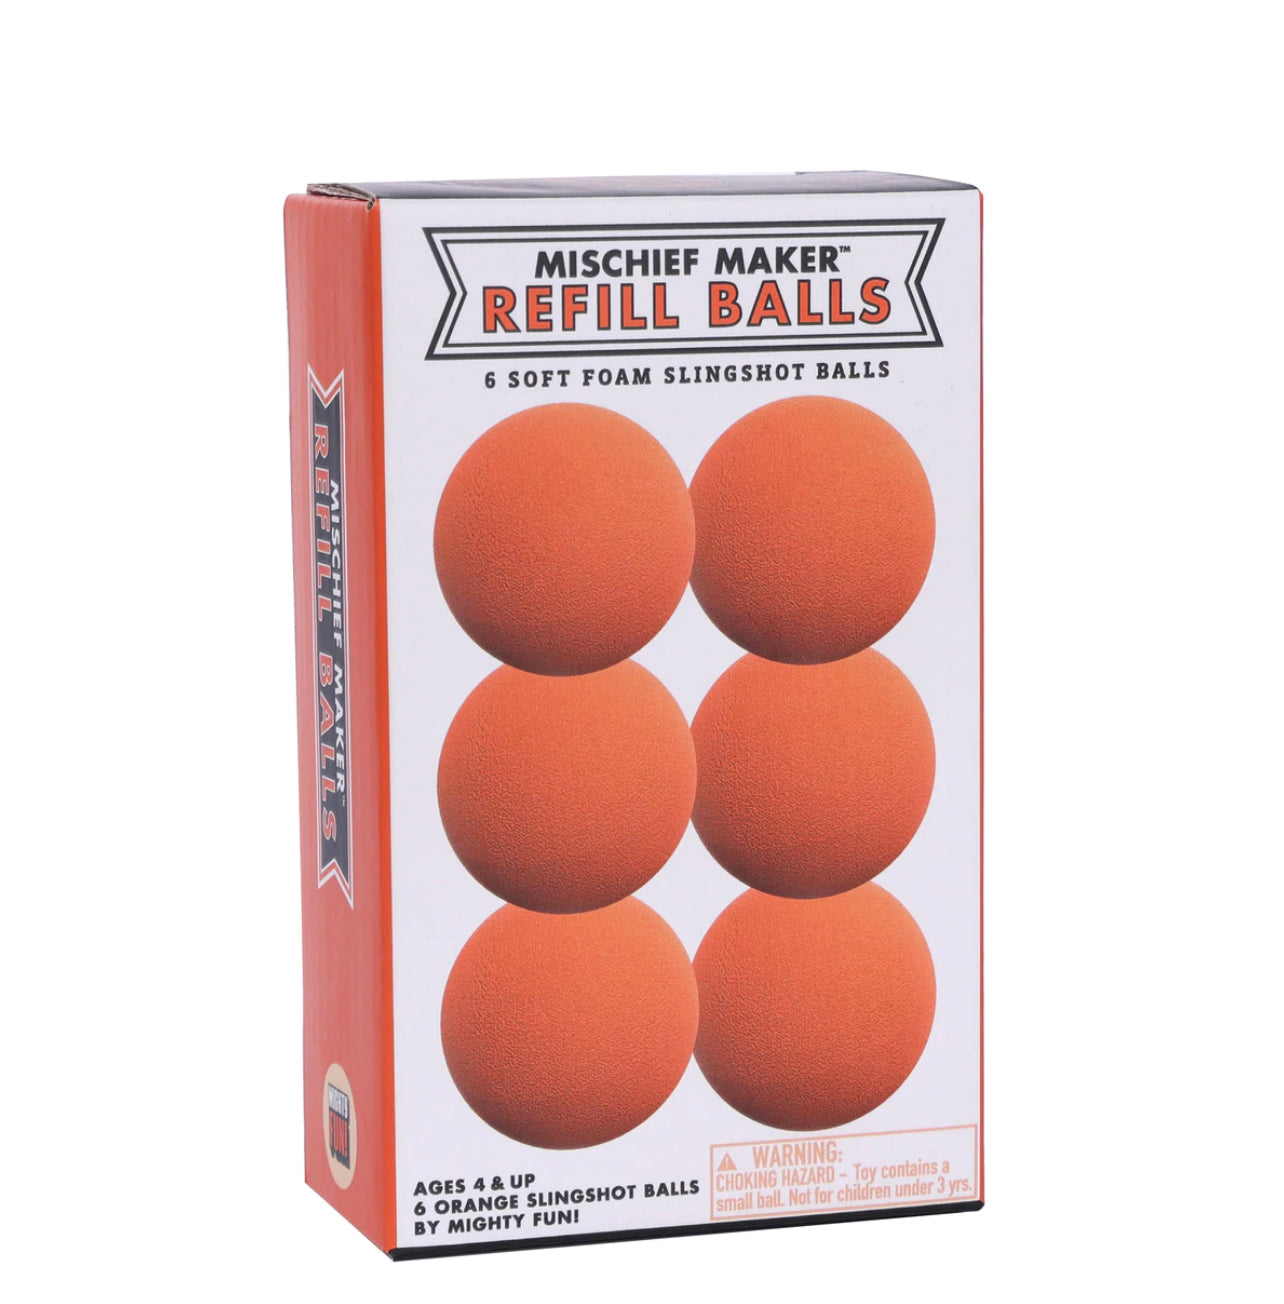 Mischief Maker: Refill Balls